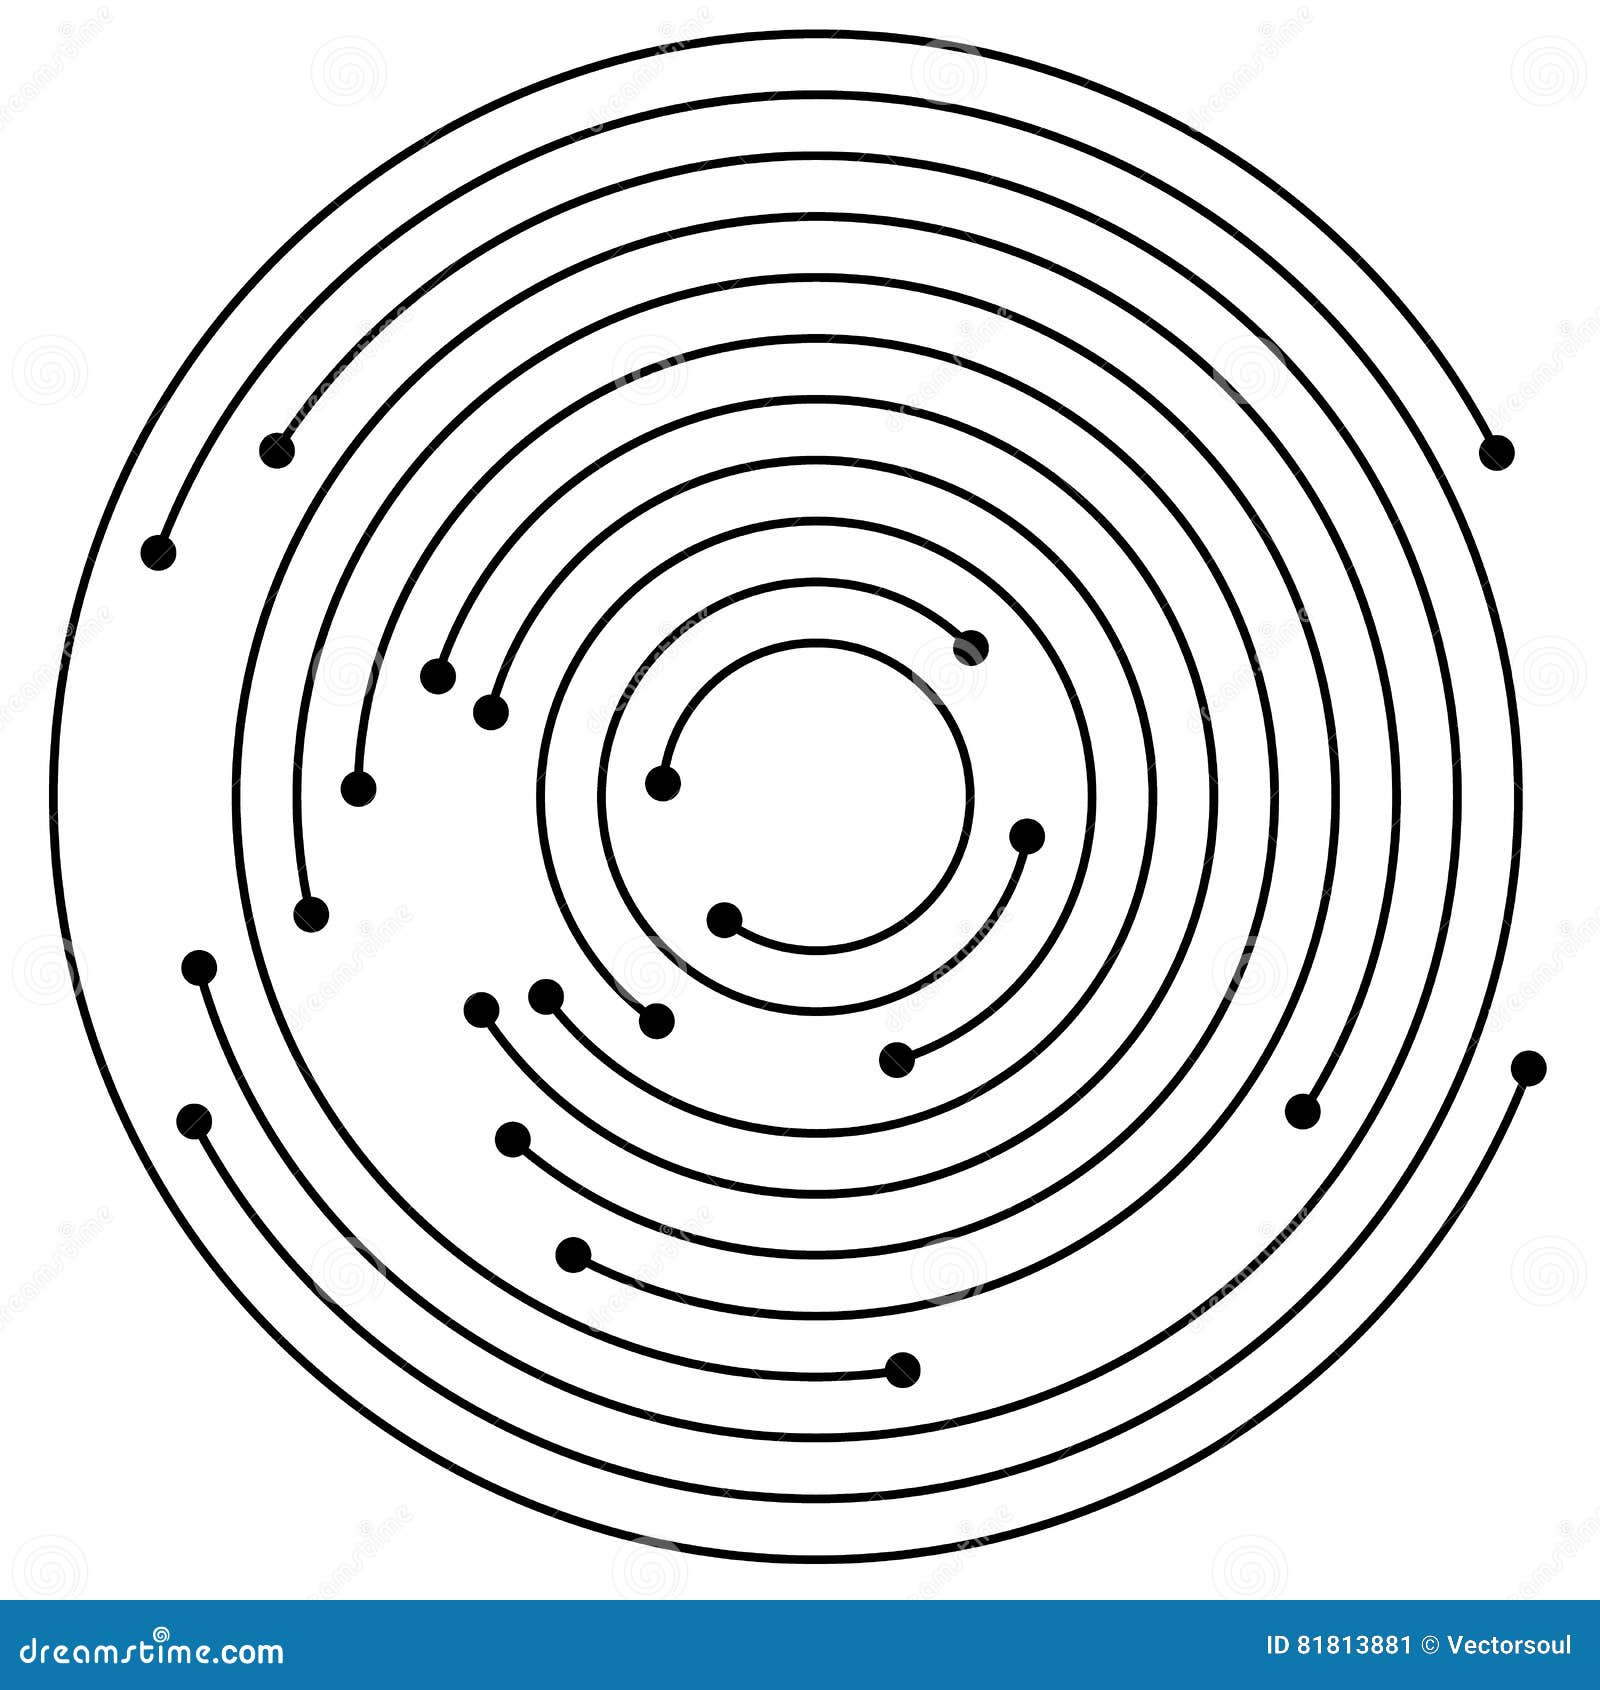 random concentric circles with dots. circular, spiral  .